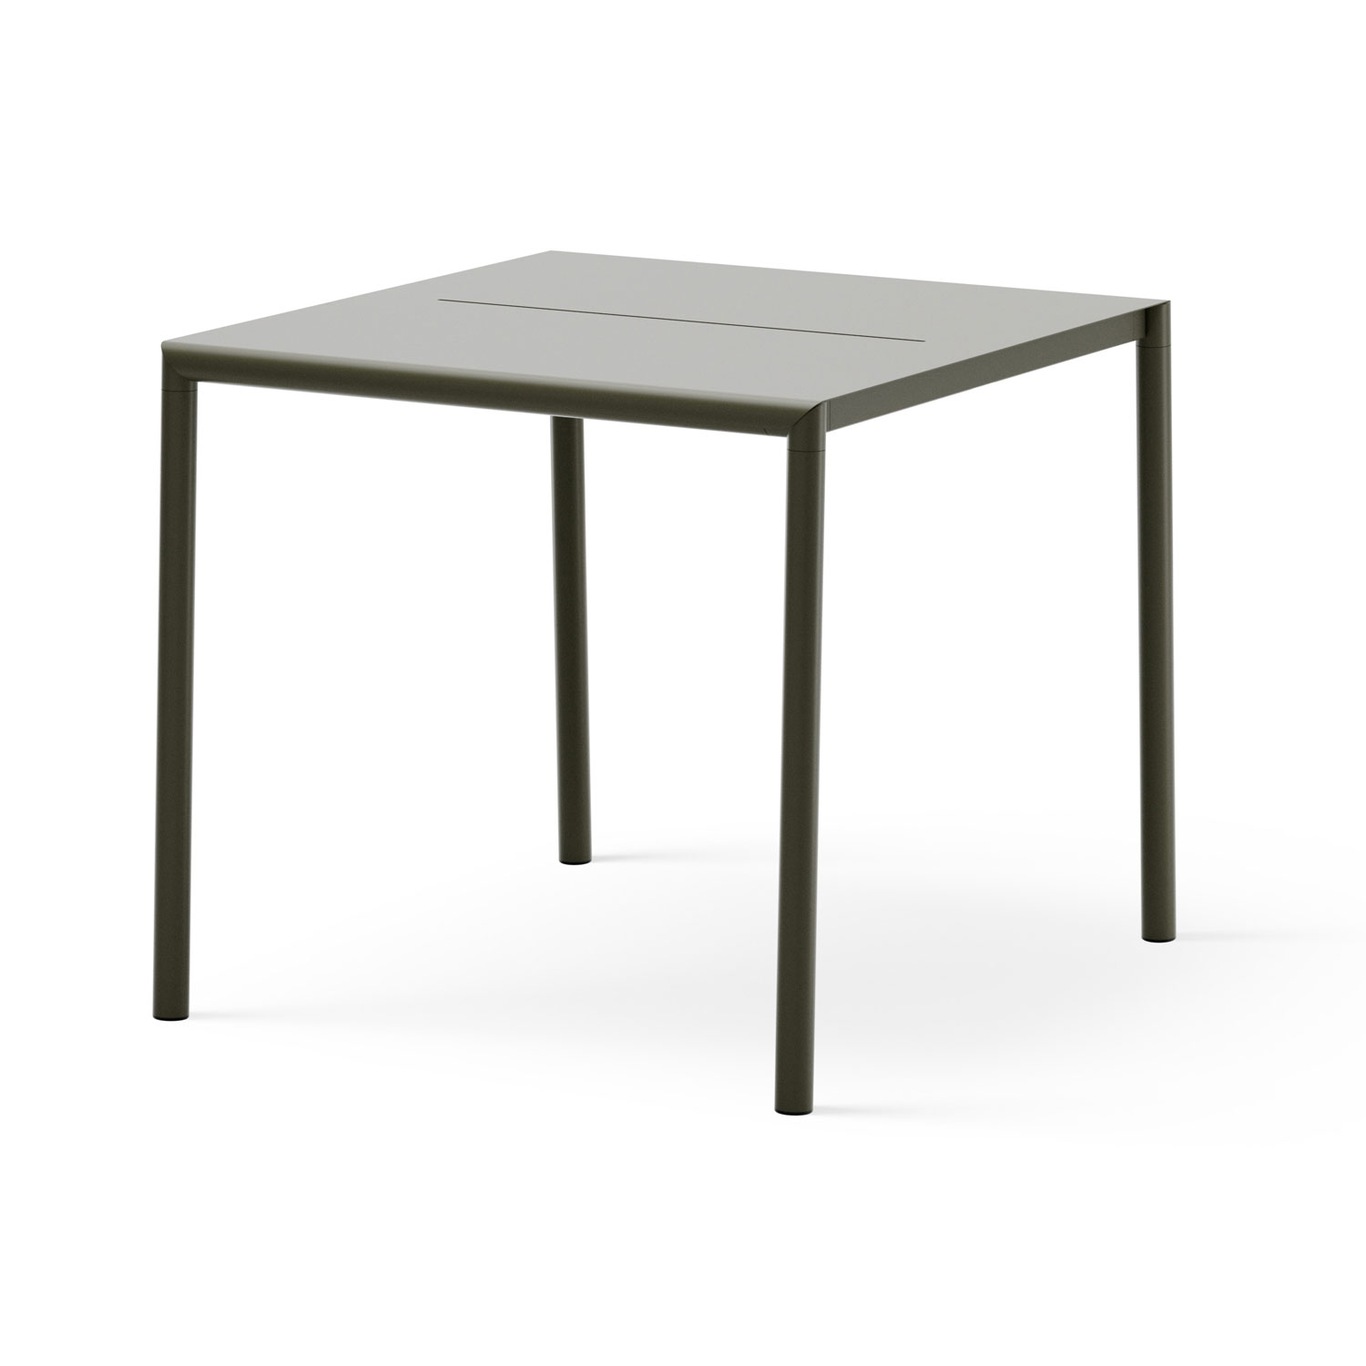 May Table 85x85, Outdoor, Steel, Dark Green